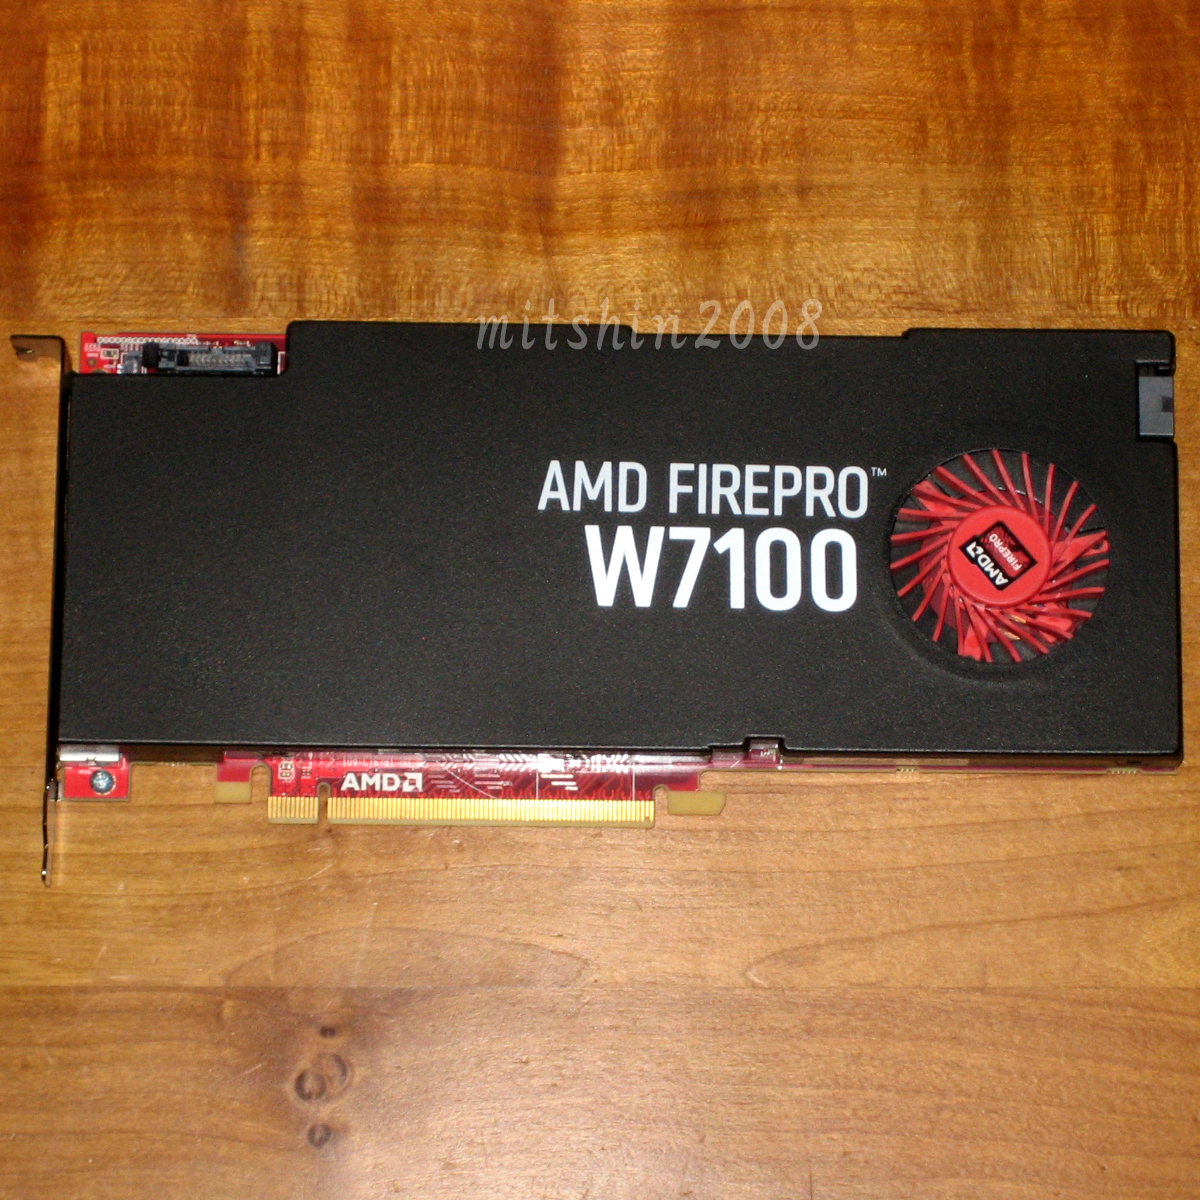 AMD FirePro W7100 (GDDR5 8GB 256bit, PCIE3.0x16, 補助電源:6ピン) 動作確認済 クリックポストなら送料185円 [No.330]